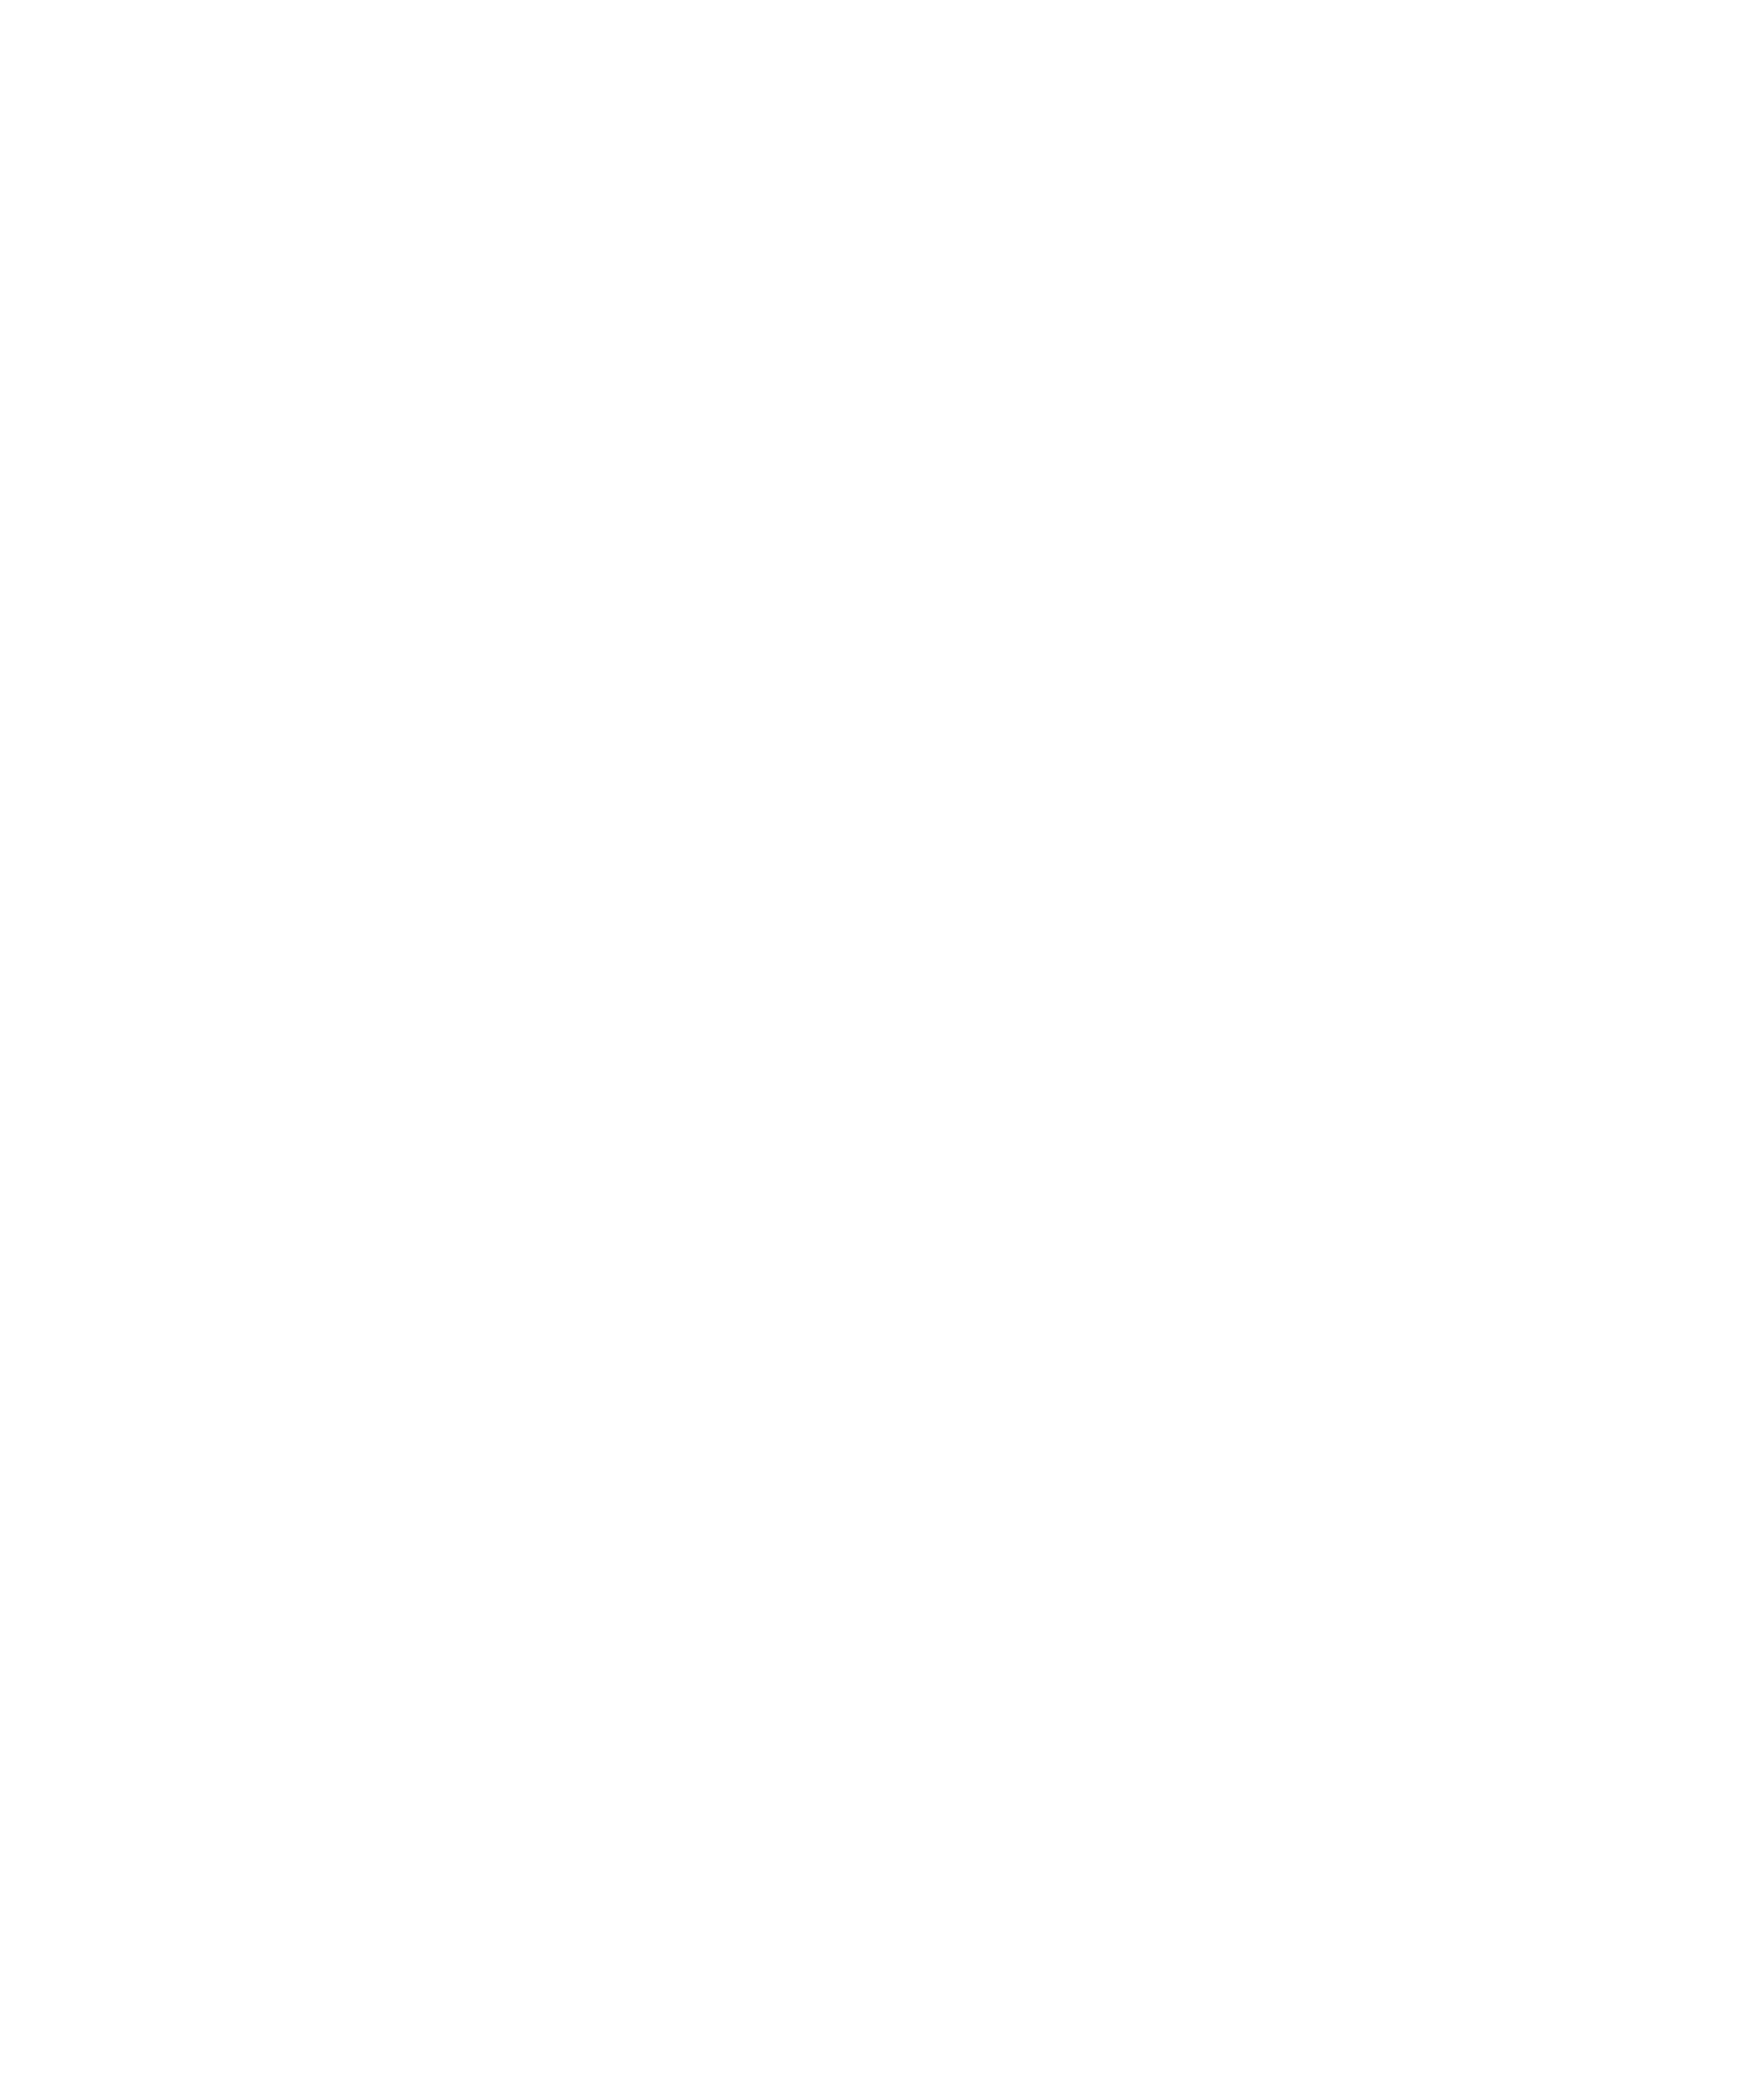 Travelers' Choice 